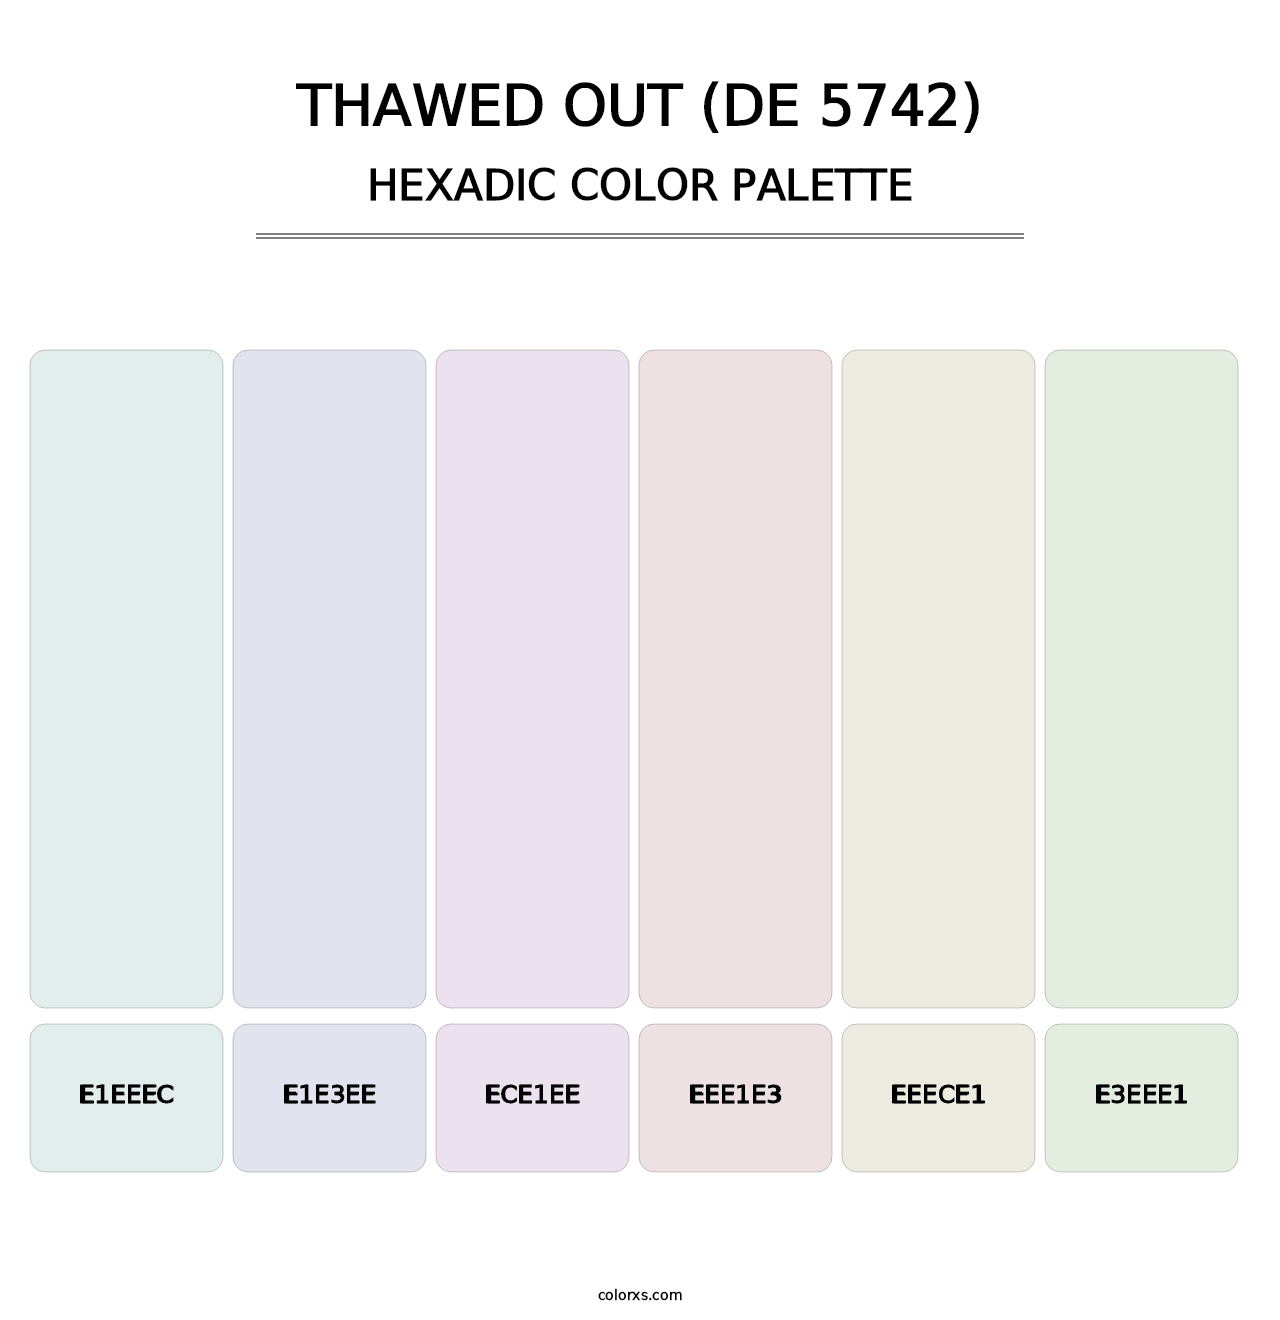 Thawed Out (DE 5742) - Hexadic Color Palette